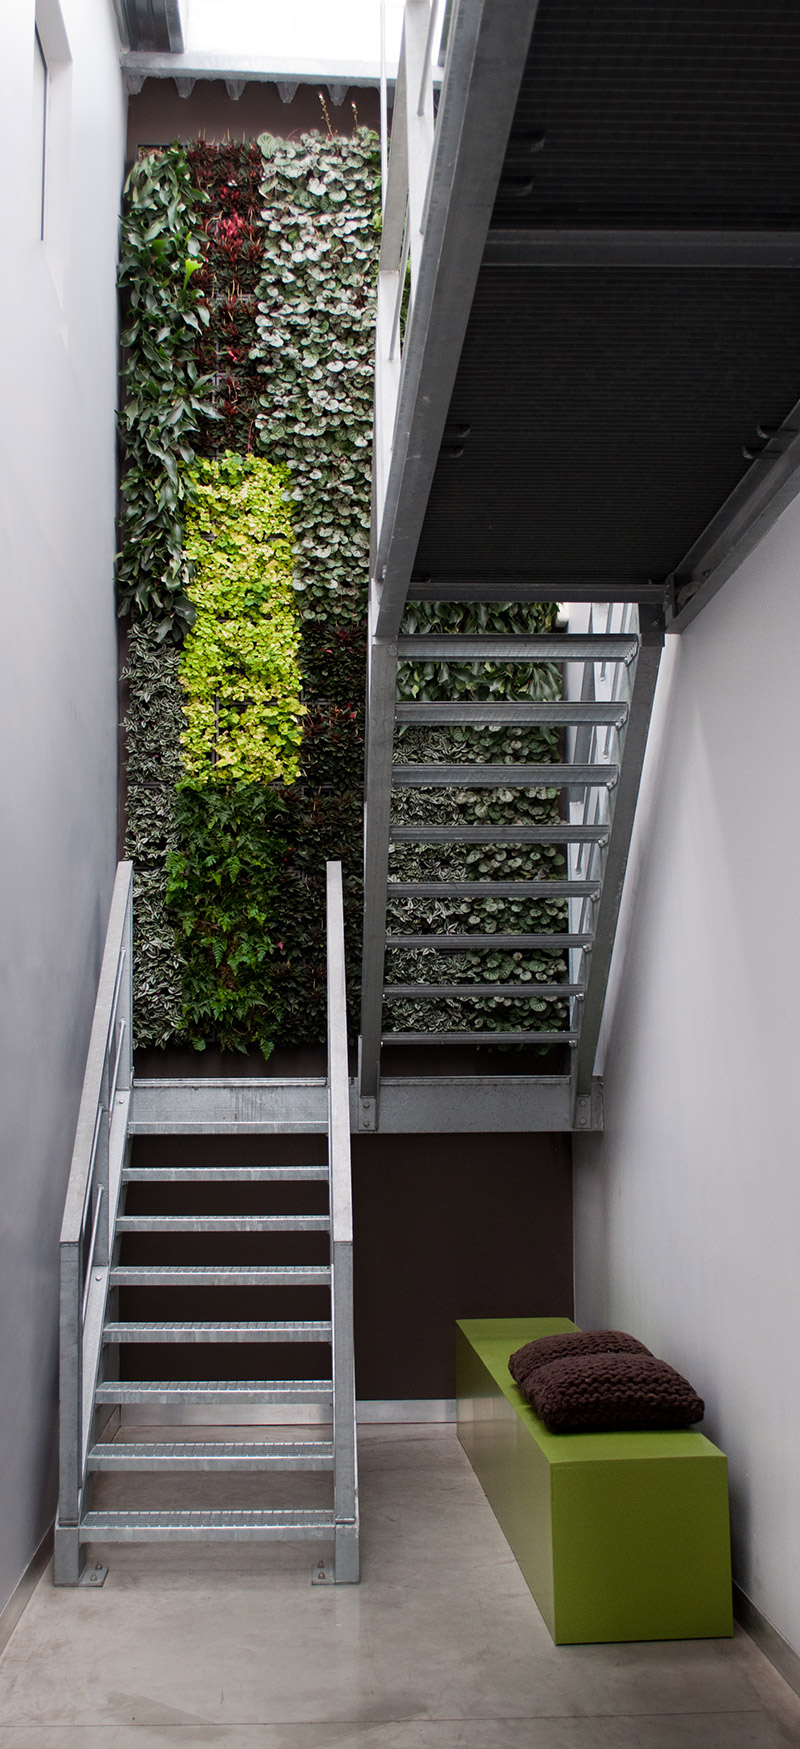 Wandbegrünung Design Idee sehr gut getestet Vertikaler Garten indoor outdoor